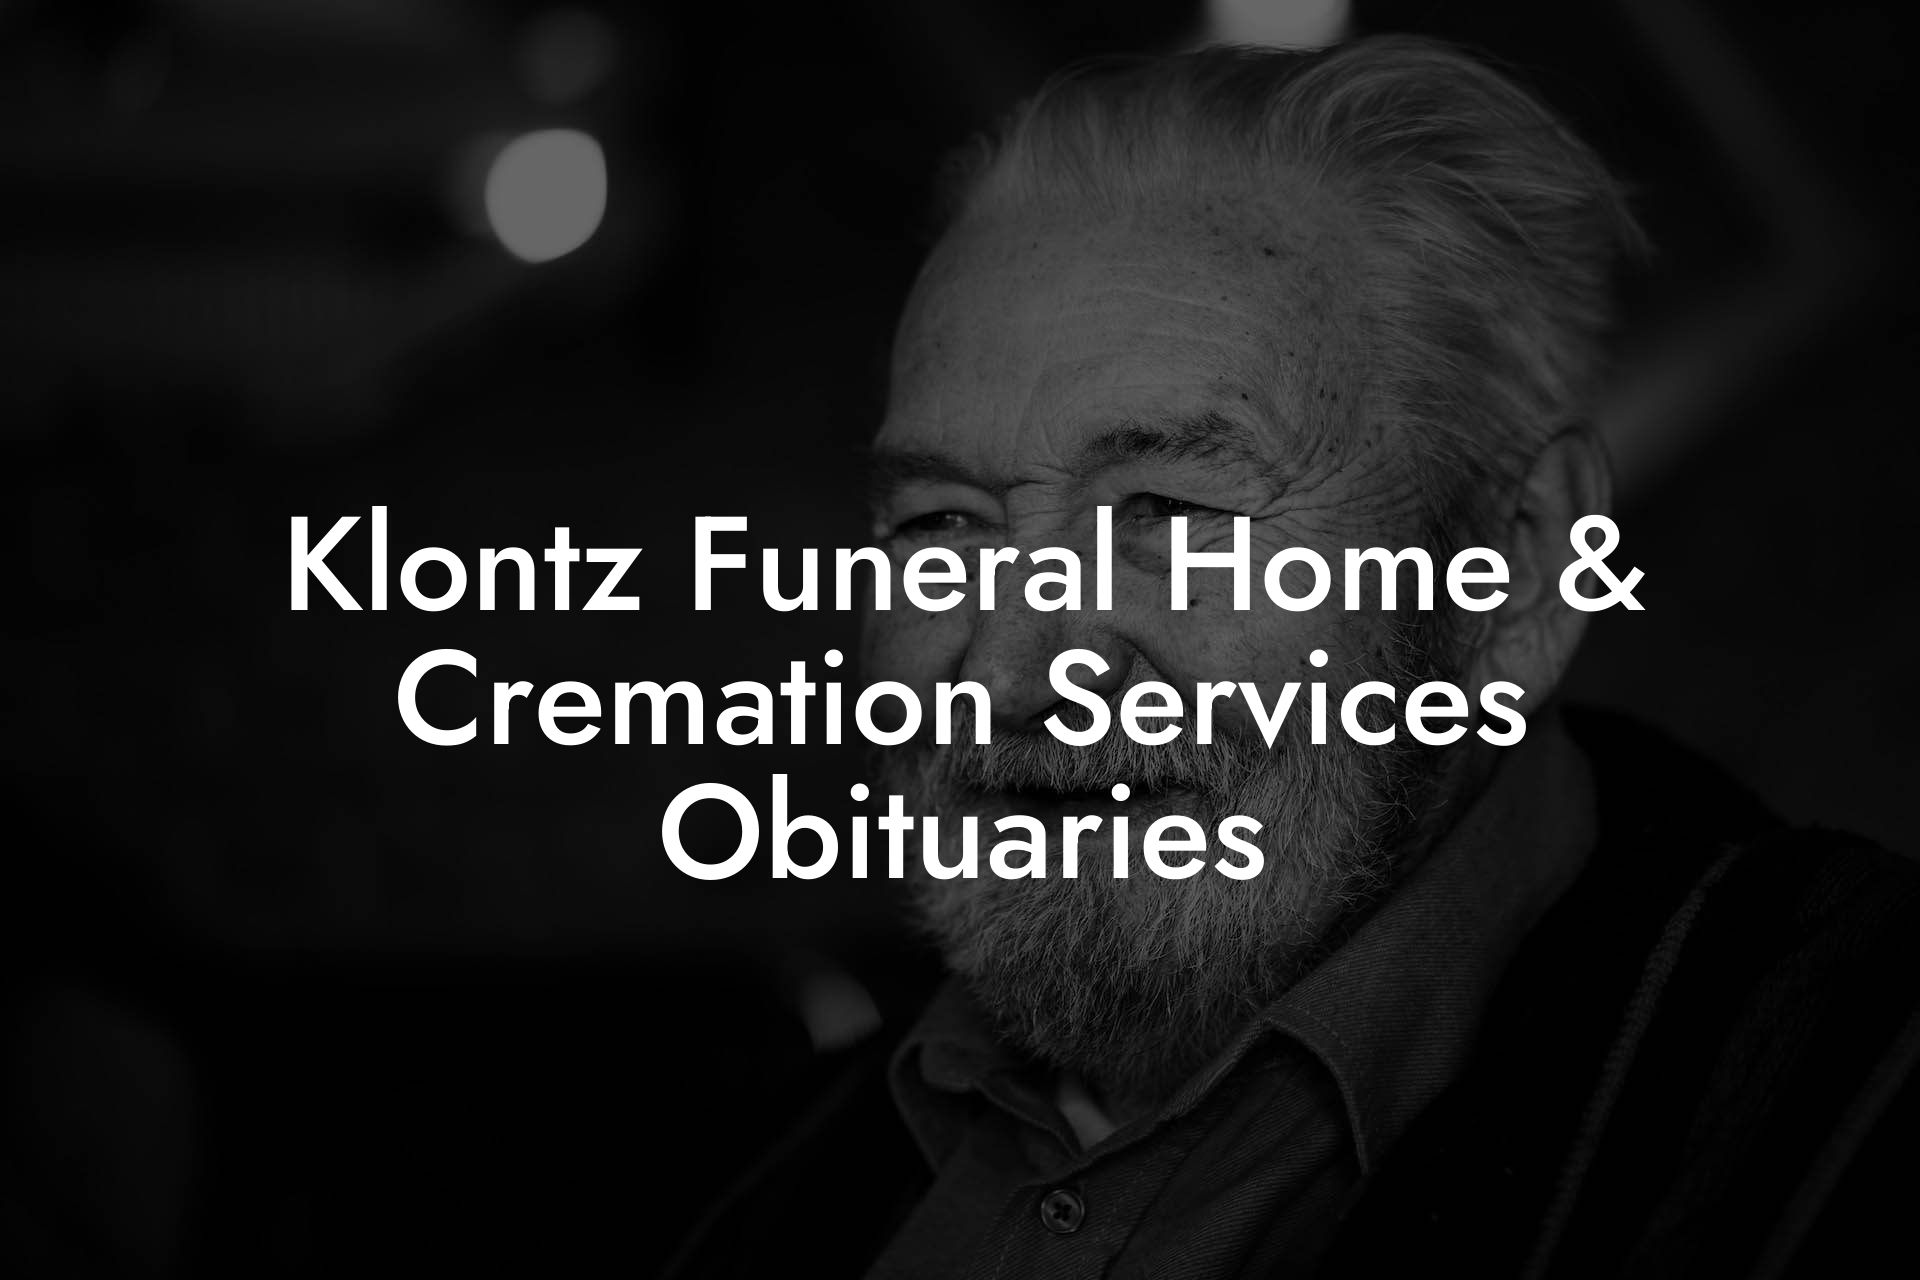 Klontz Funeral Home & Cremation Services Obituaries